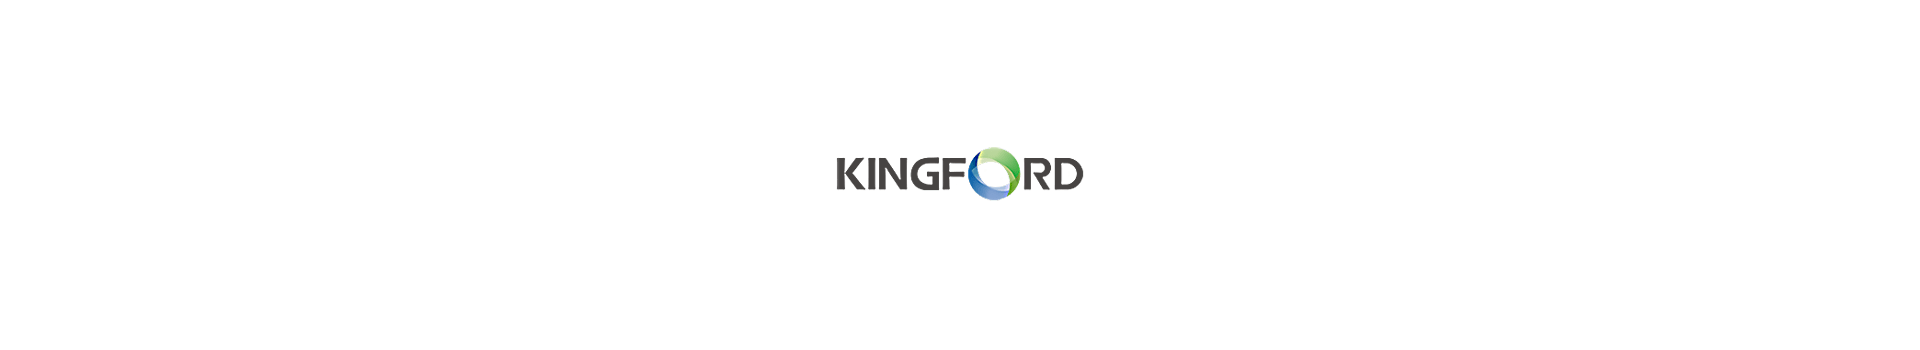 Kingford Attestation